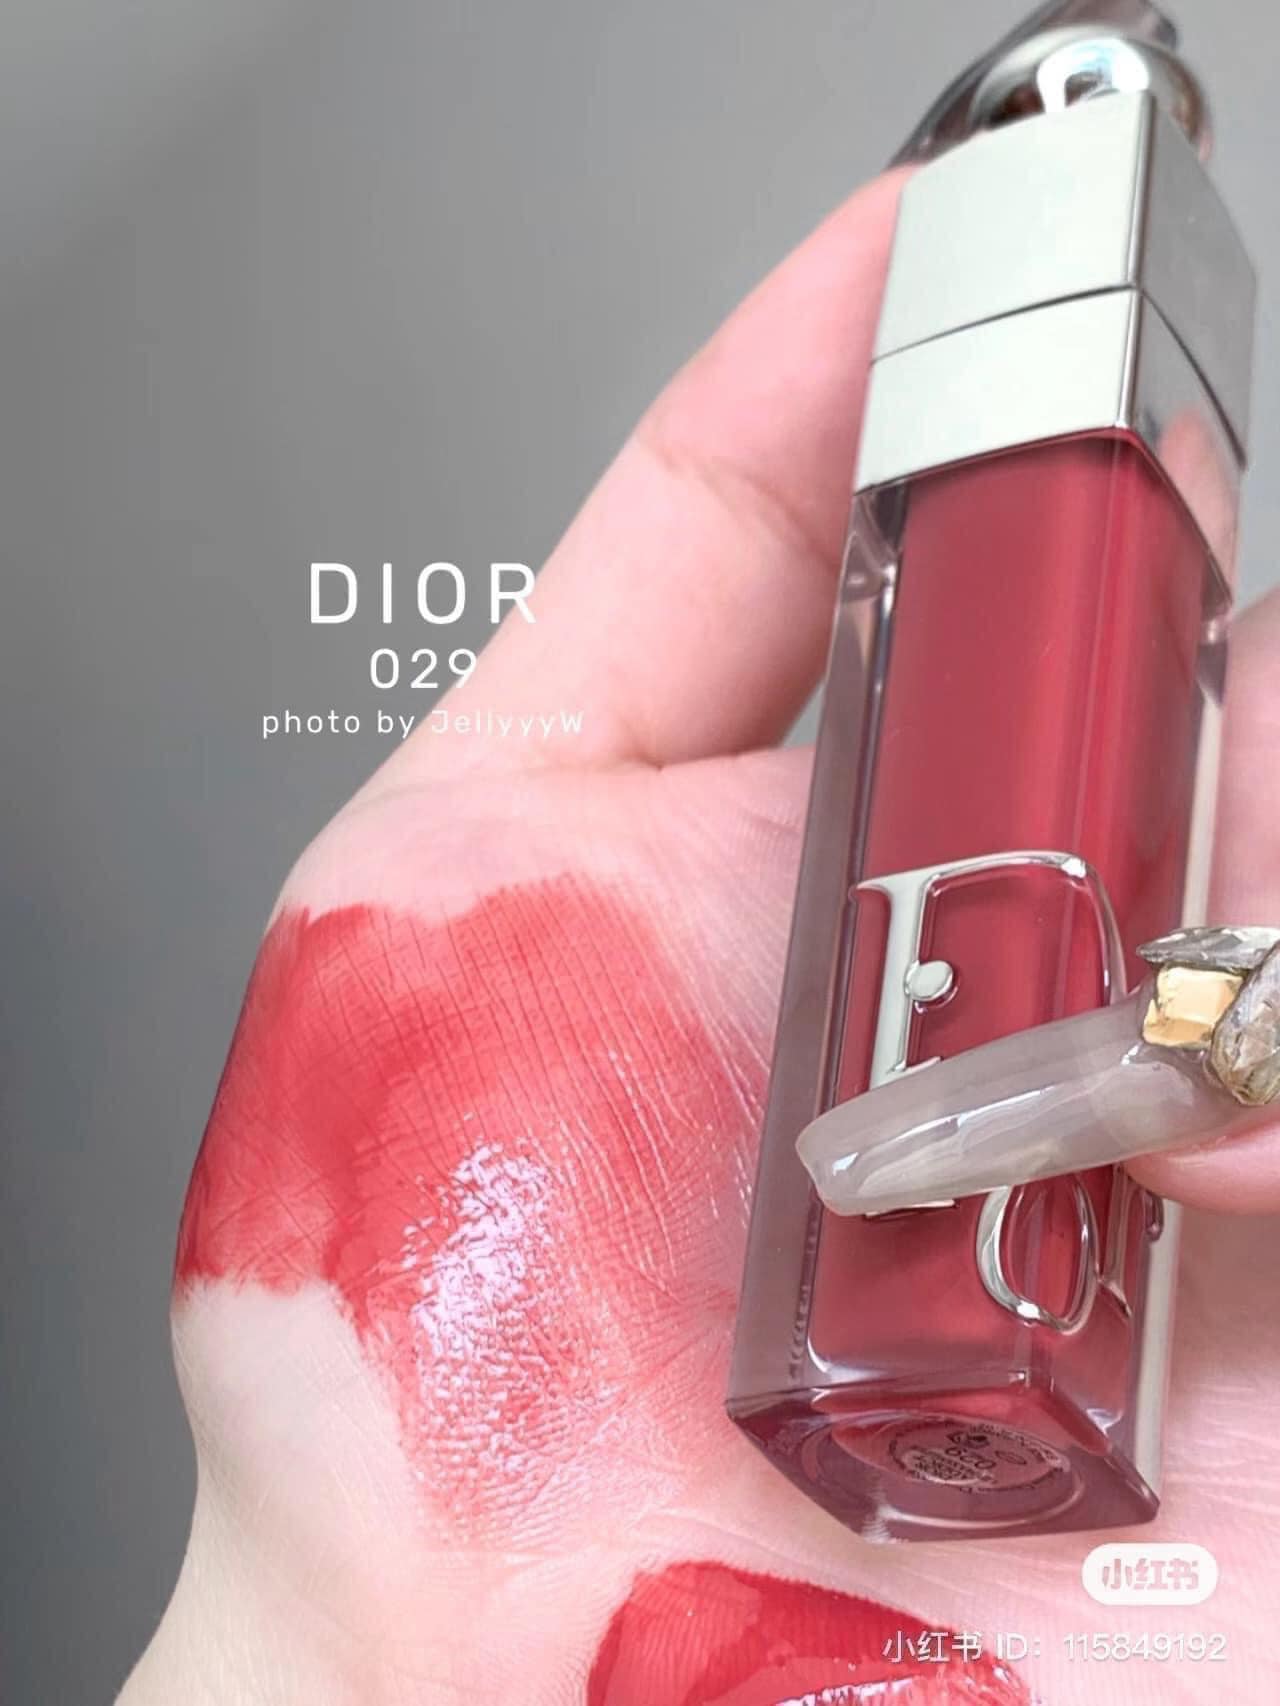 Son Dưỡng Dior Lip Maximizer Mẫu Mới Fullsize Unbox #029 Hồng Nho